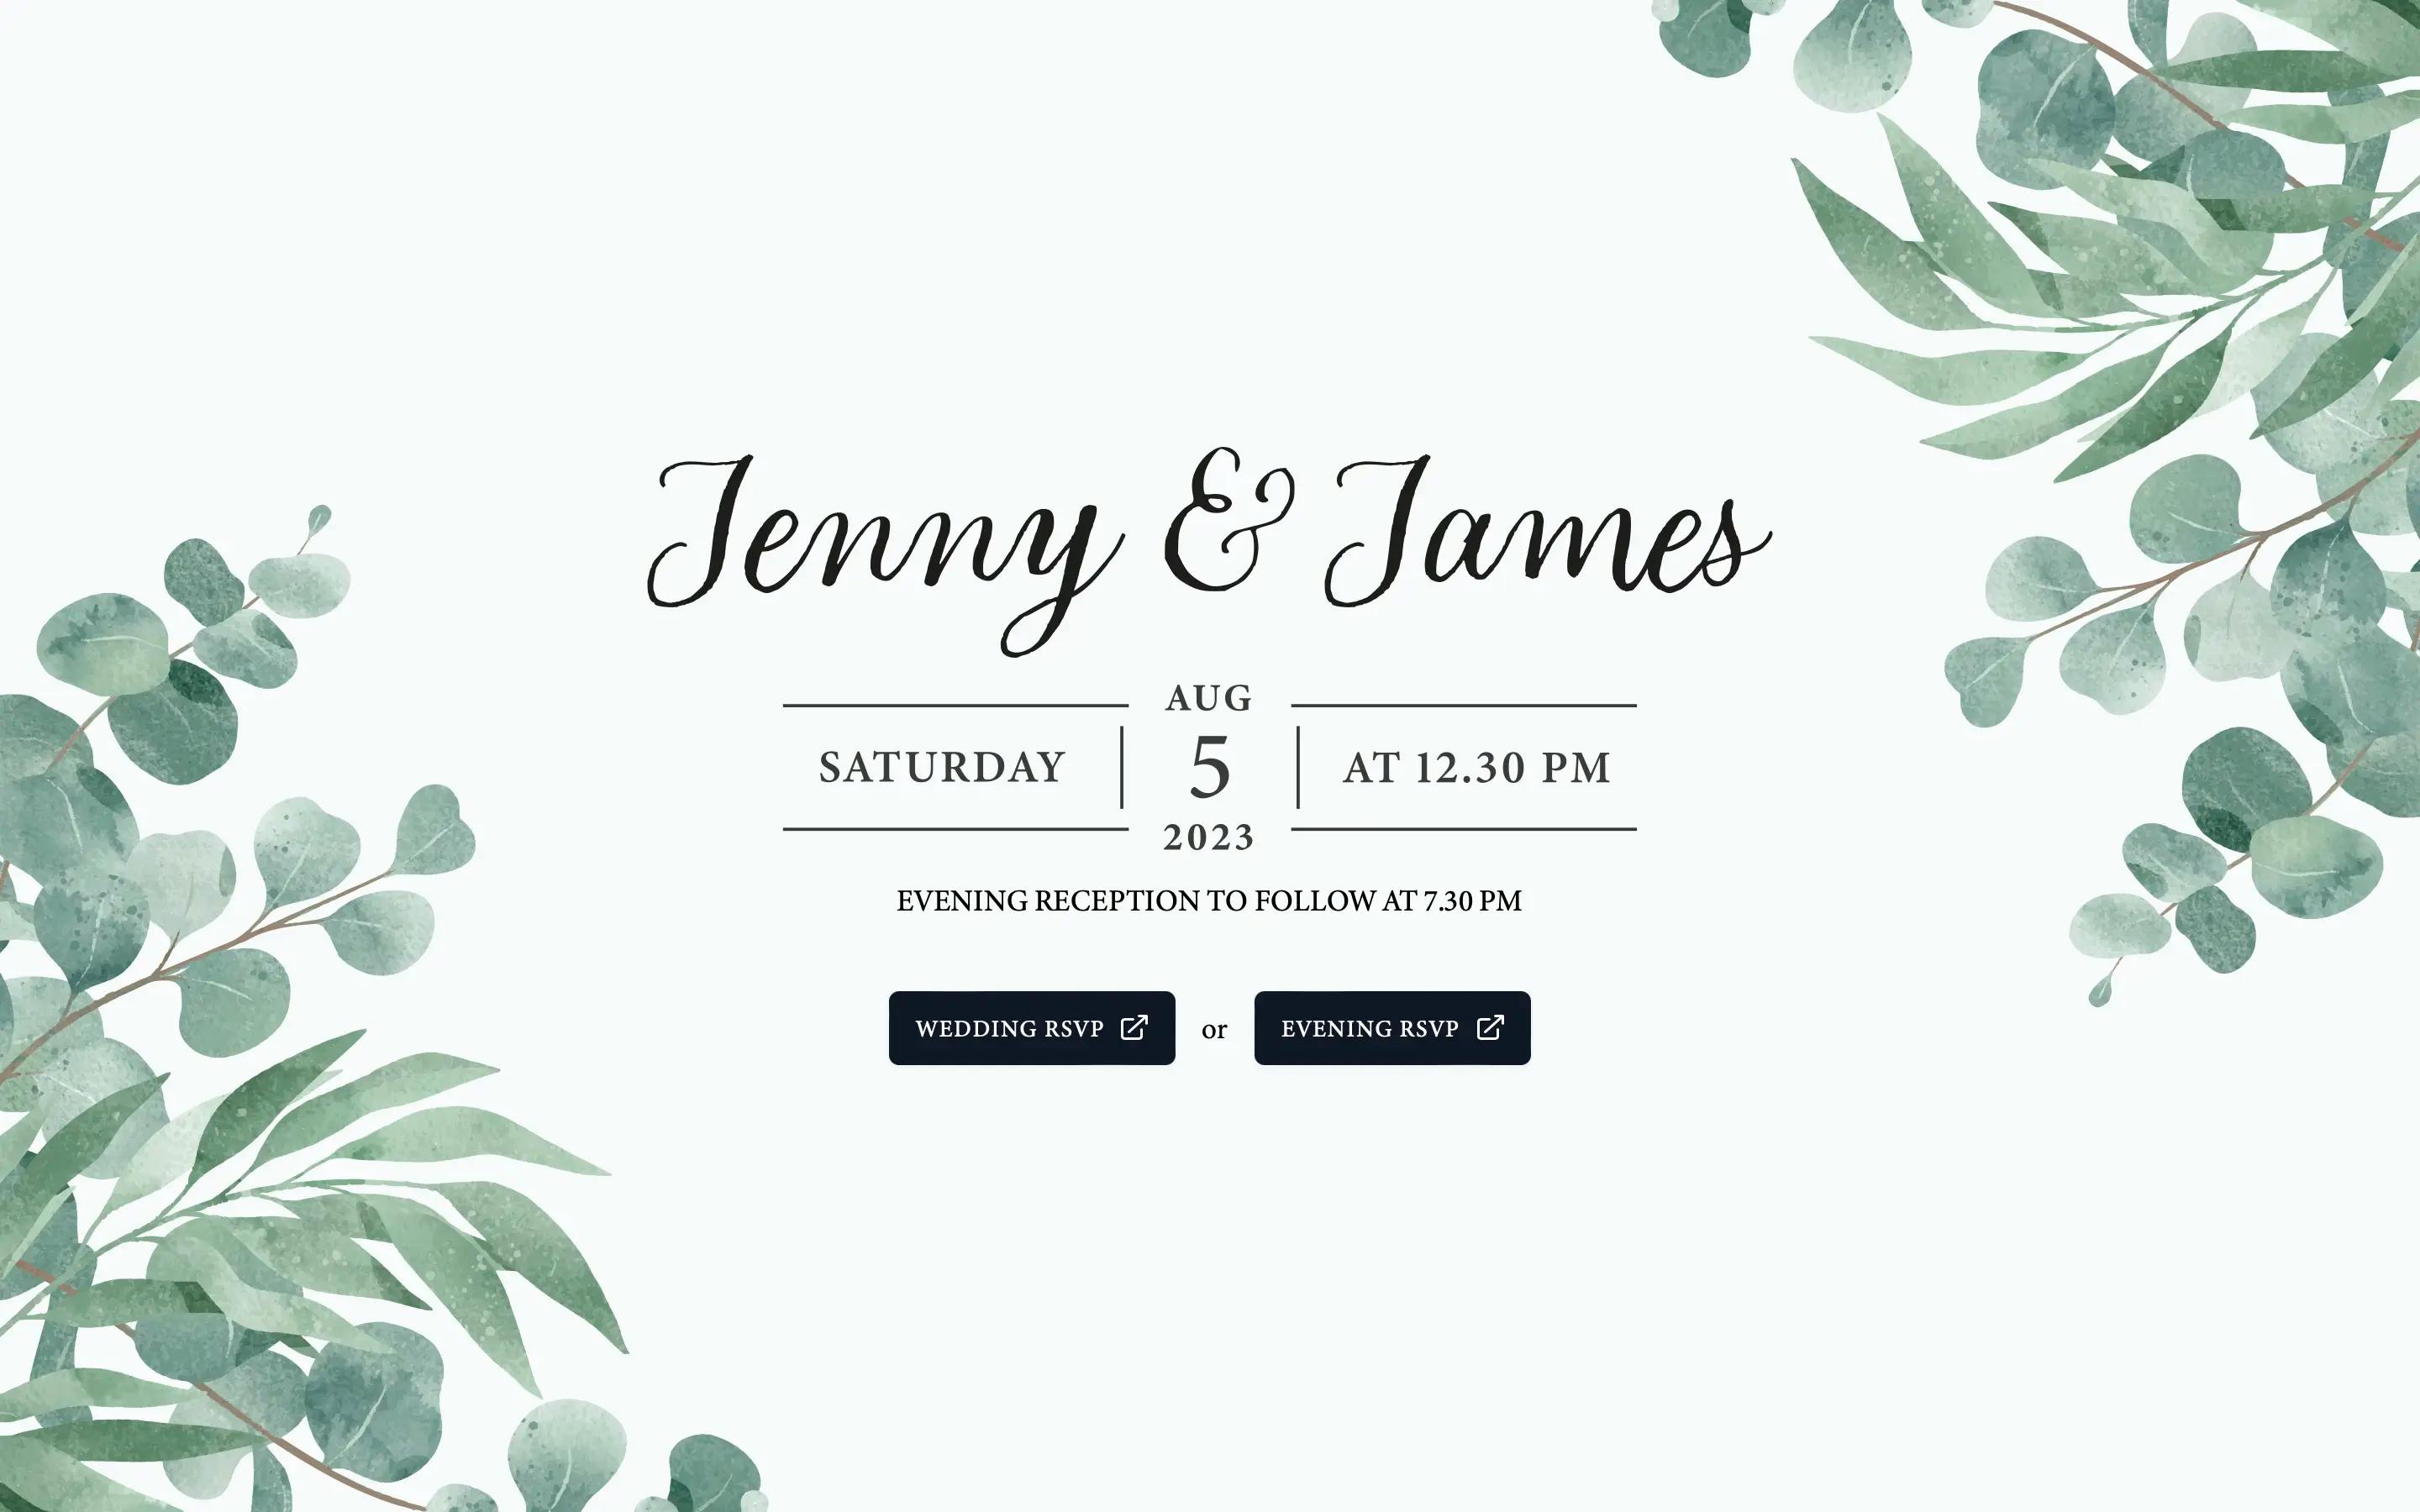 Jenny & James Wedding